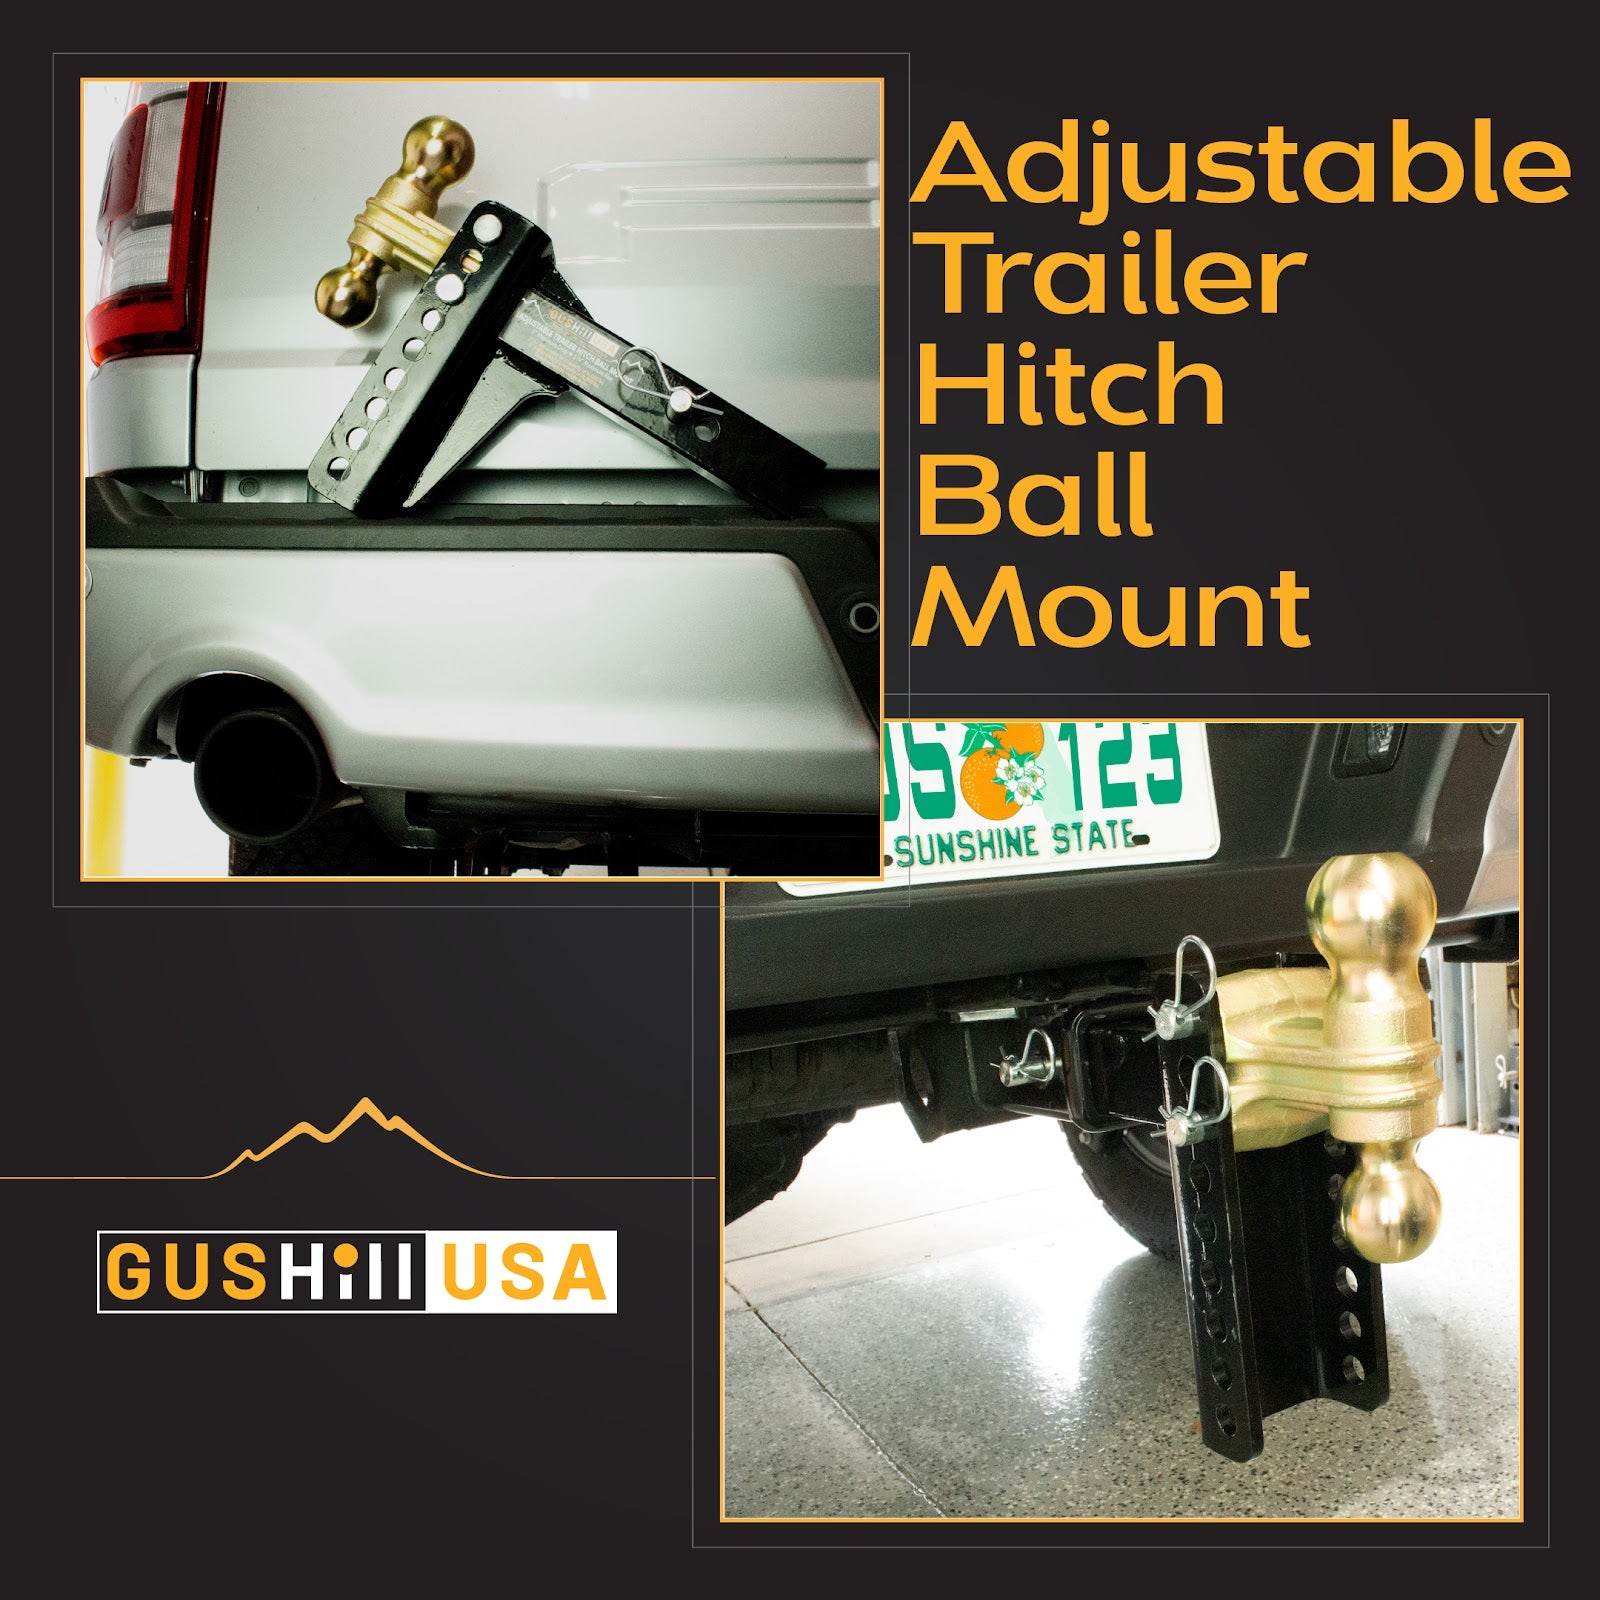 Adjustable Trailer Hitch Ball Mount